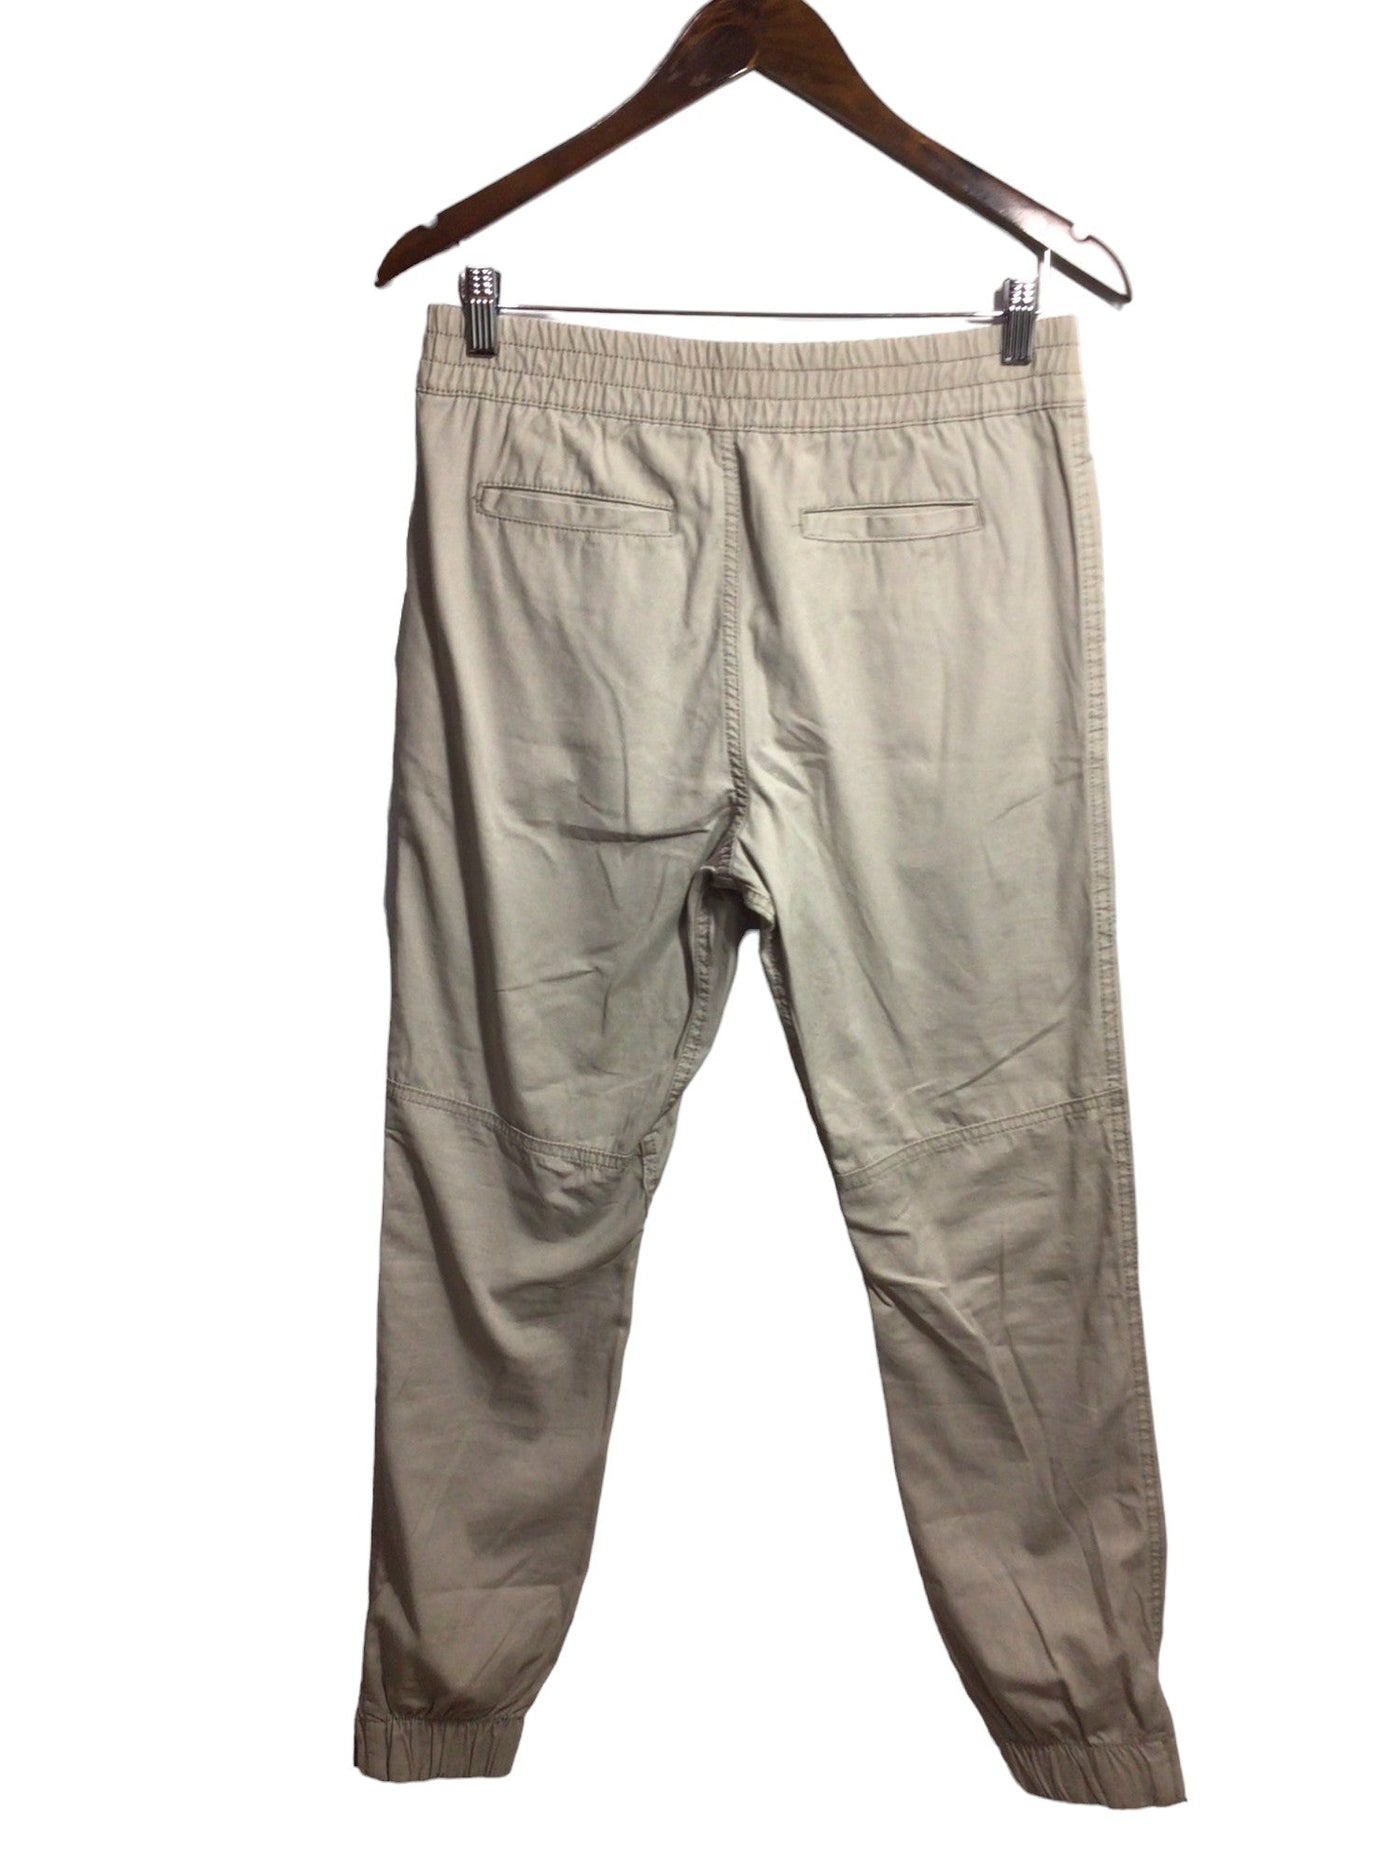 TAINTED DENIM Women Work Pants Regular fit in Beige - Size 28 | 15 $ KOOP